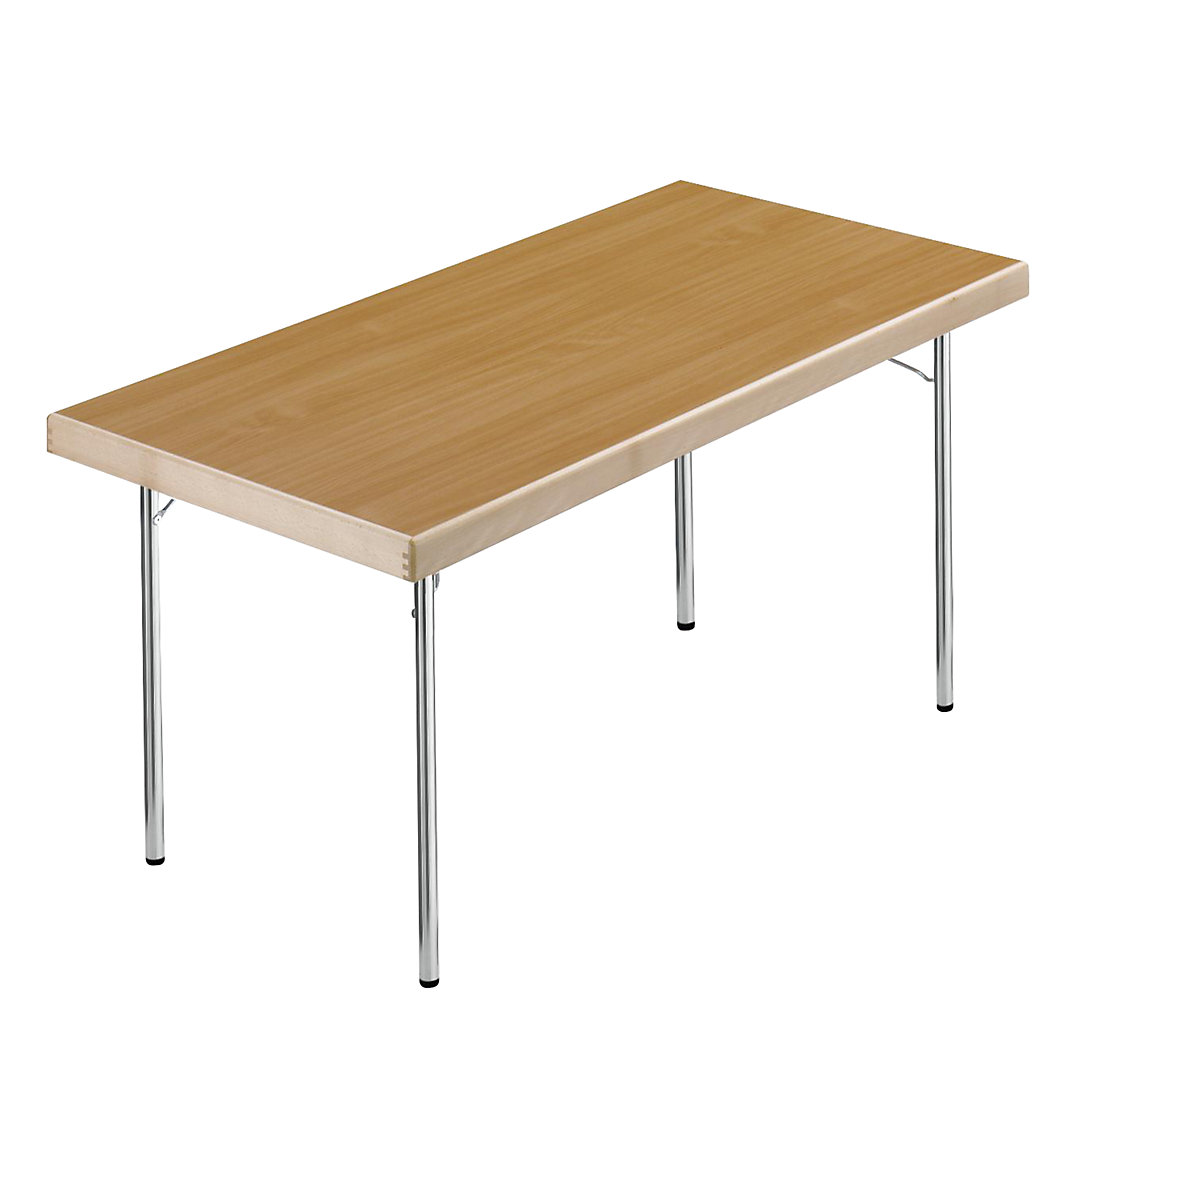 Inklapbare tafel, 4 voetsframe, 1500 x 800 mm, frame verchroomd, blad beukenhoutdecor-11